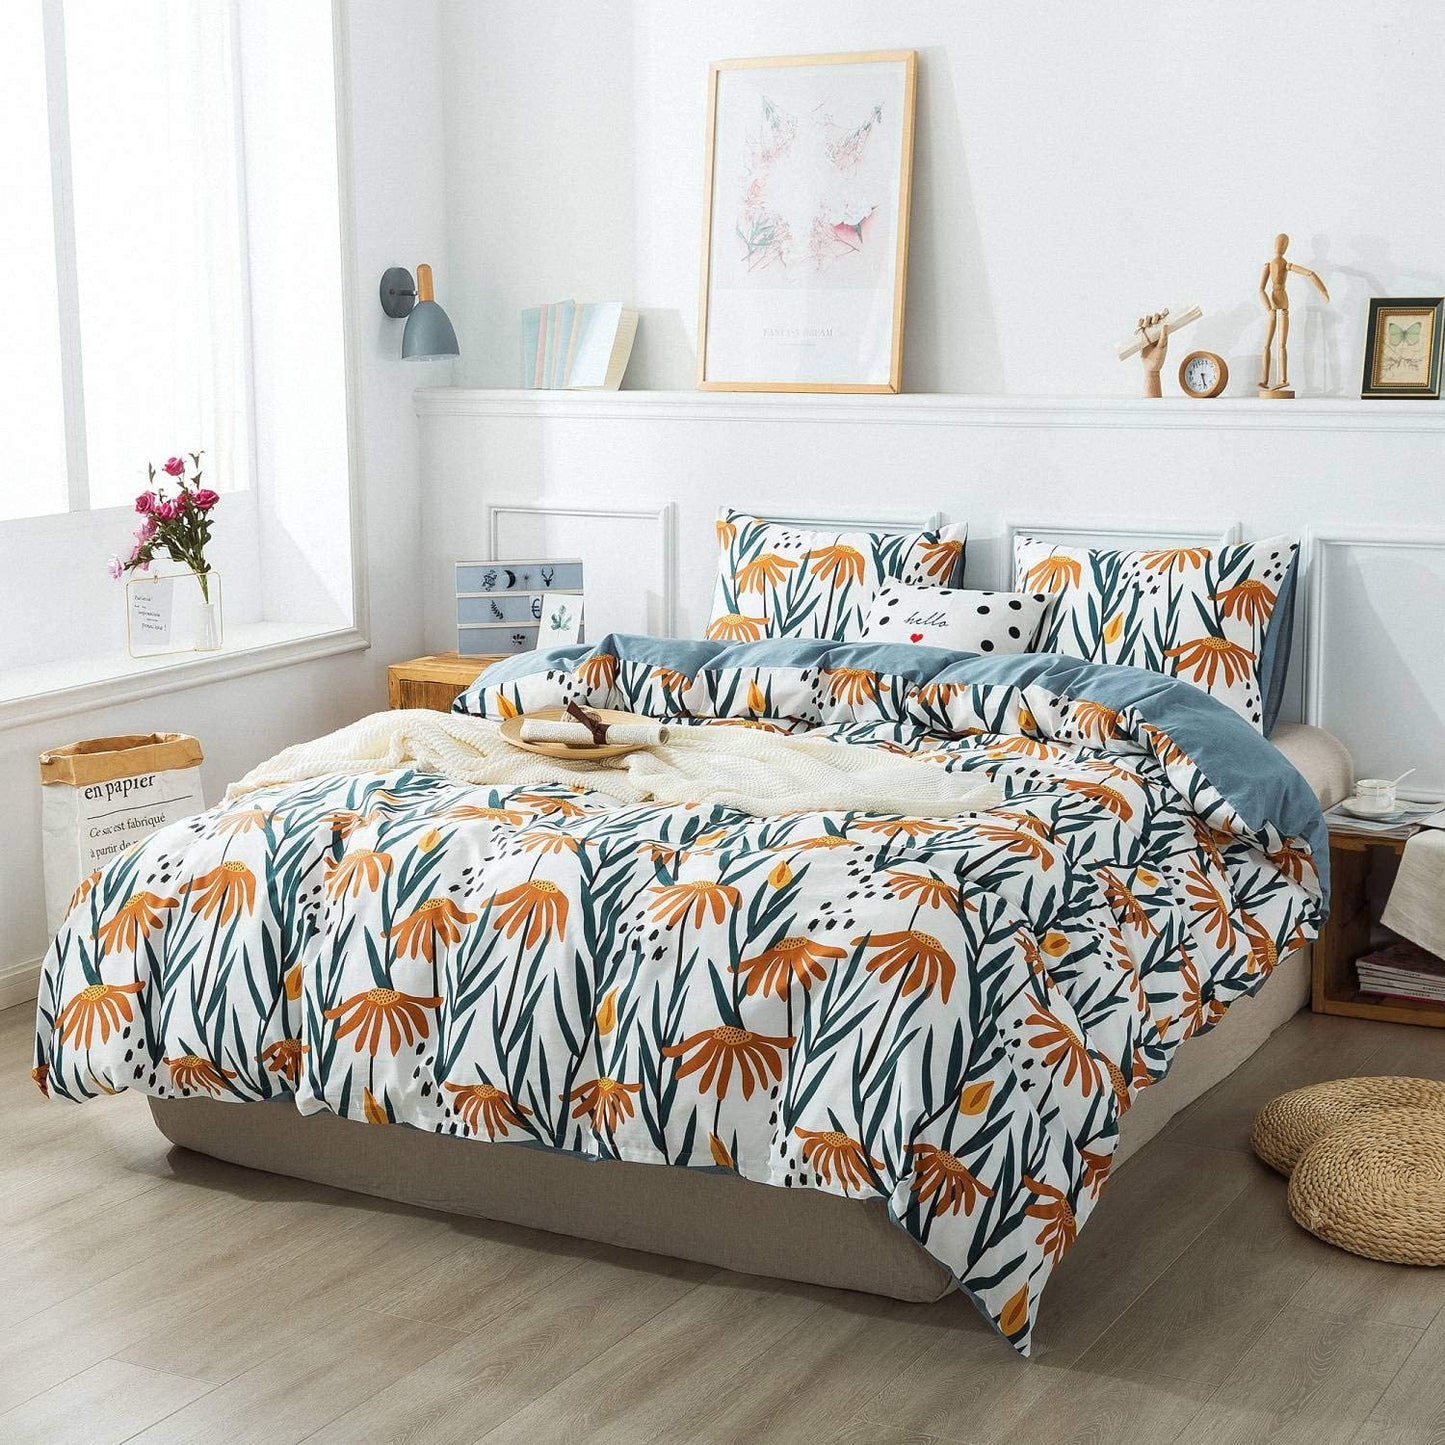 100% Cotton Comforter Cover Floral Duvet Cover Sets, Orange Lotus